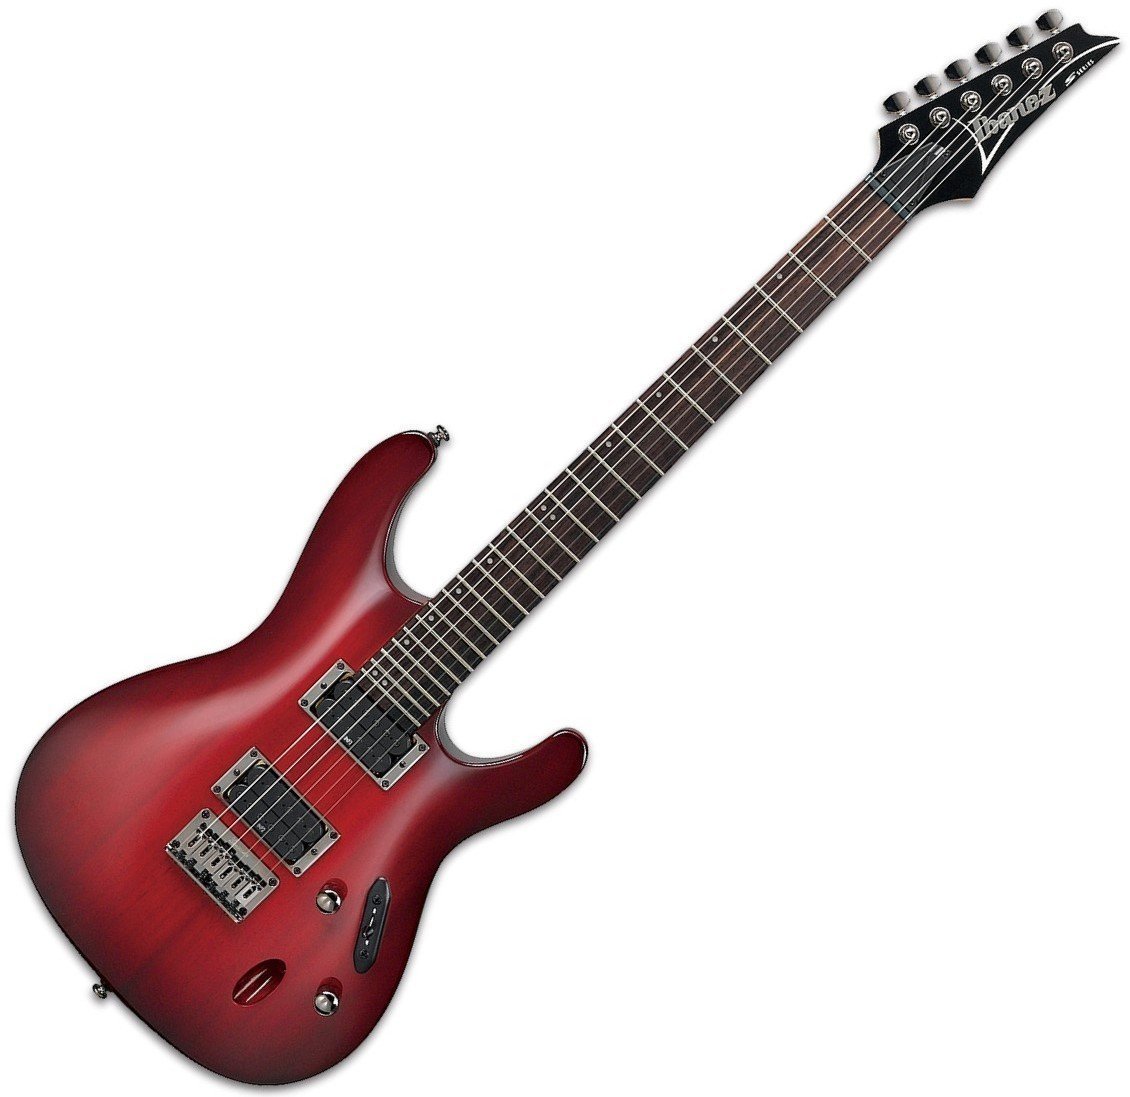 Elektrická kytara Ibanez S521-BBS Blackberry Sunburst